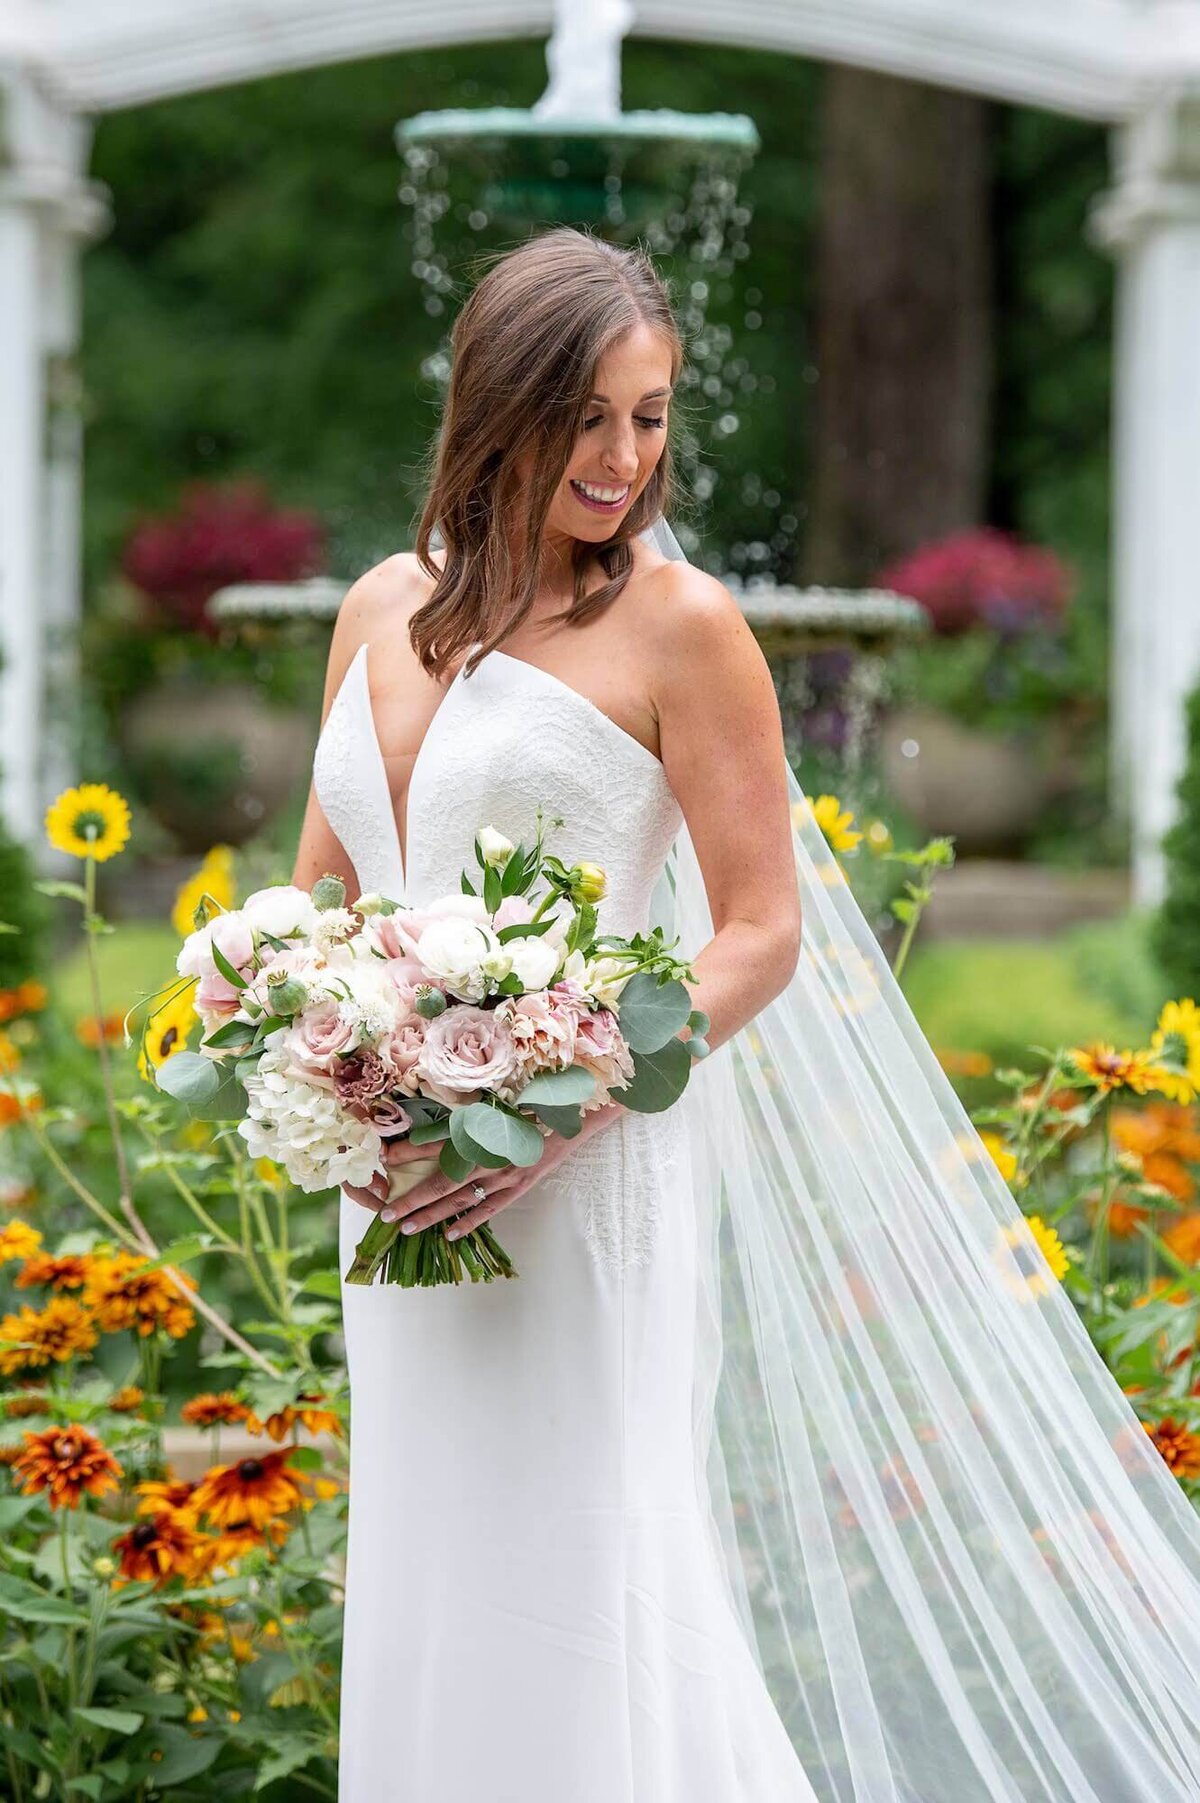 Anna Barnard Wedding - bride smiling with flowers